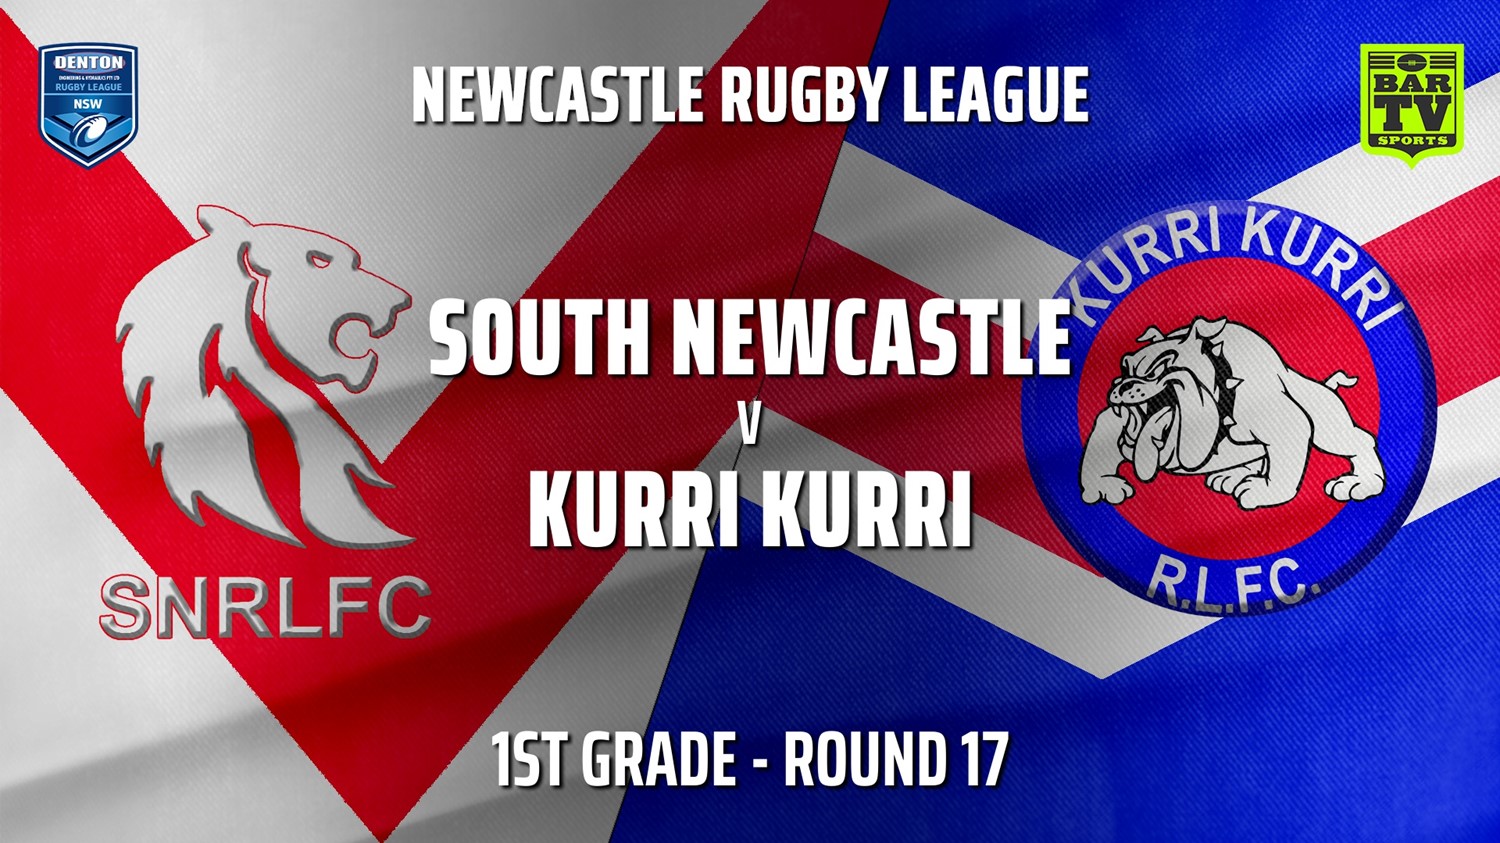 210801-Newcastle Round 17 - 1st Grade - South Newcastle v Kurri Kurri Bulldogs Slate Image